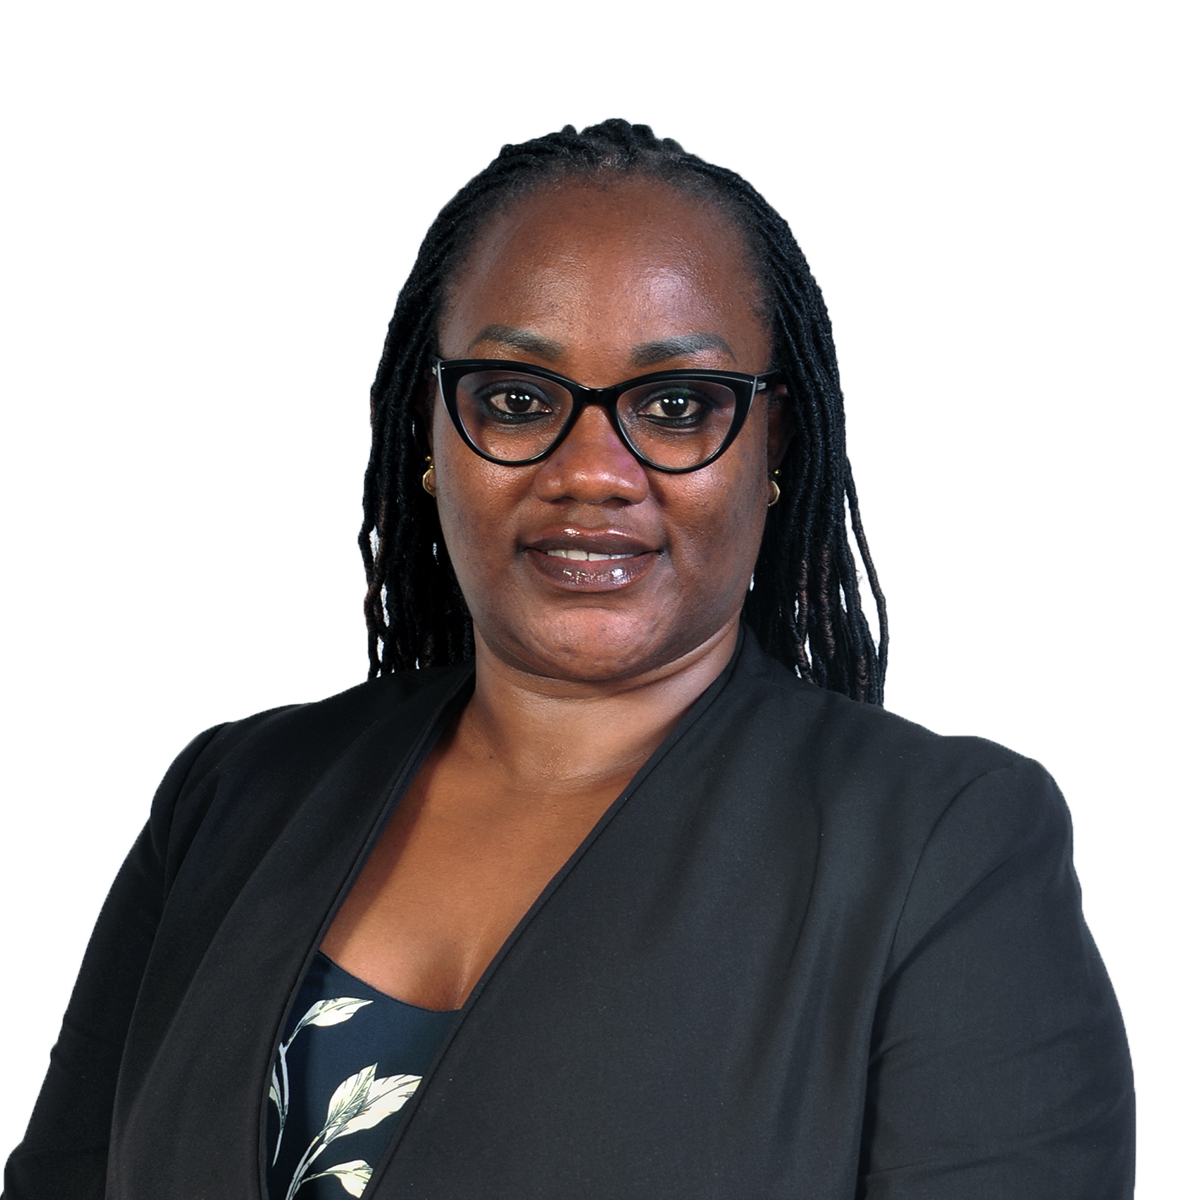 Pascaline UMUTESI, Group Secretary and Head of Legal Advisory Services